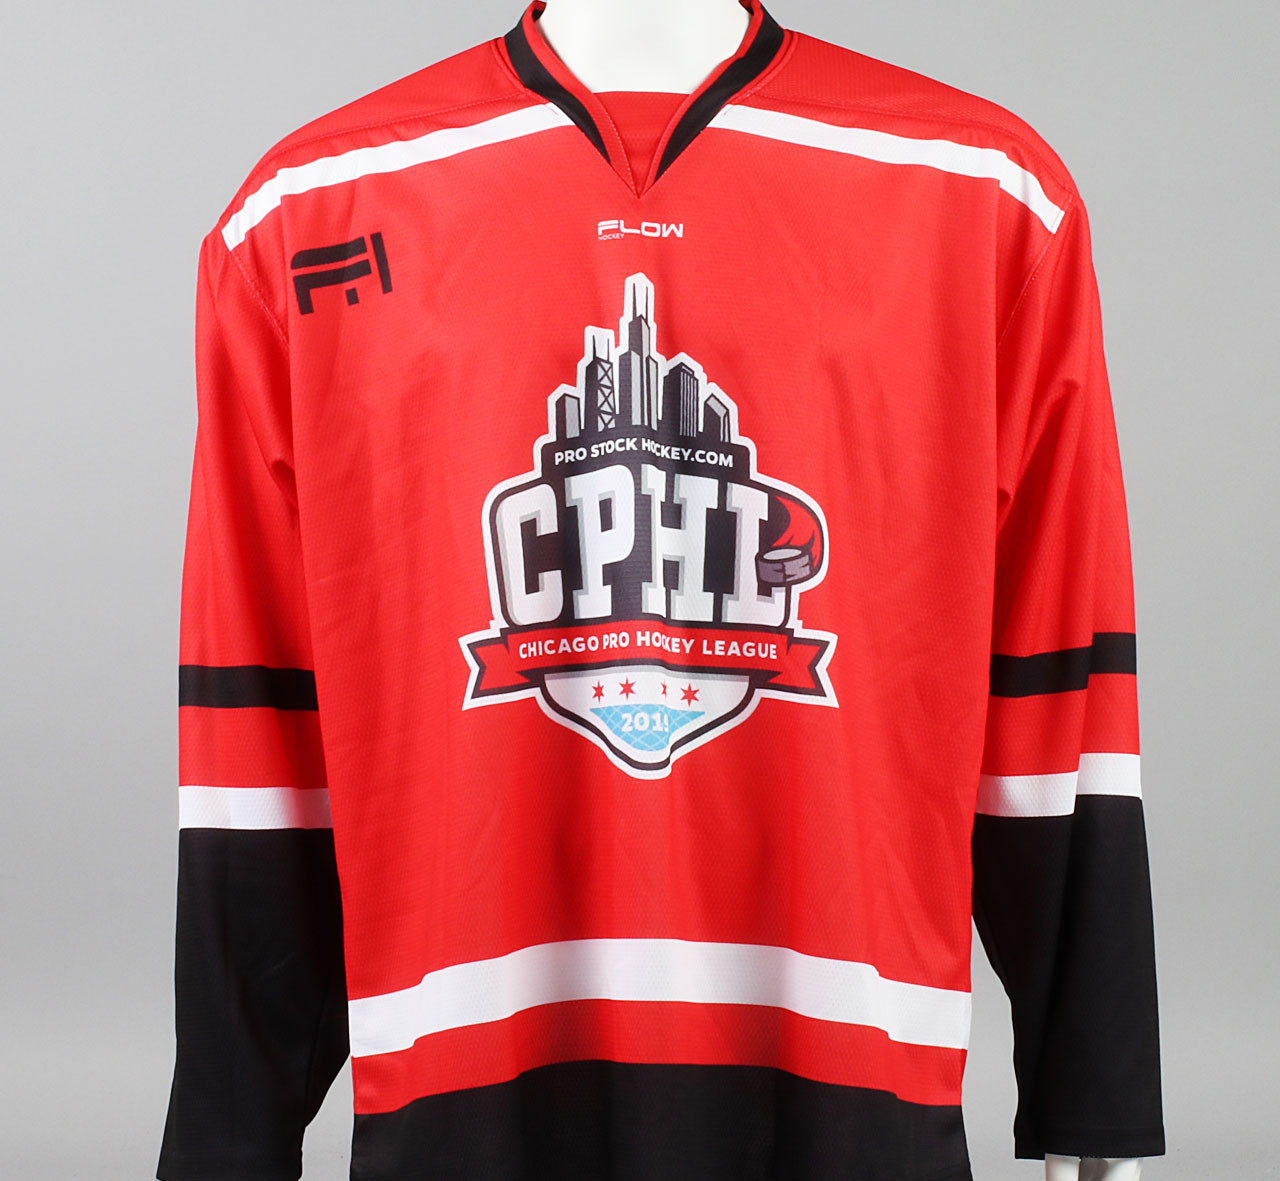 2019 Chicago Pro Hockey League Jersey 